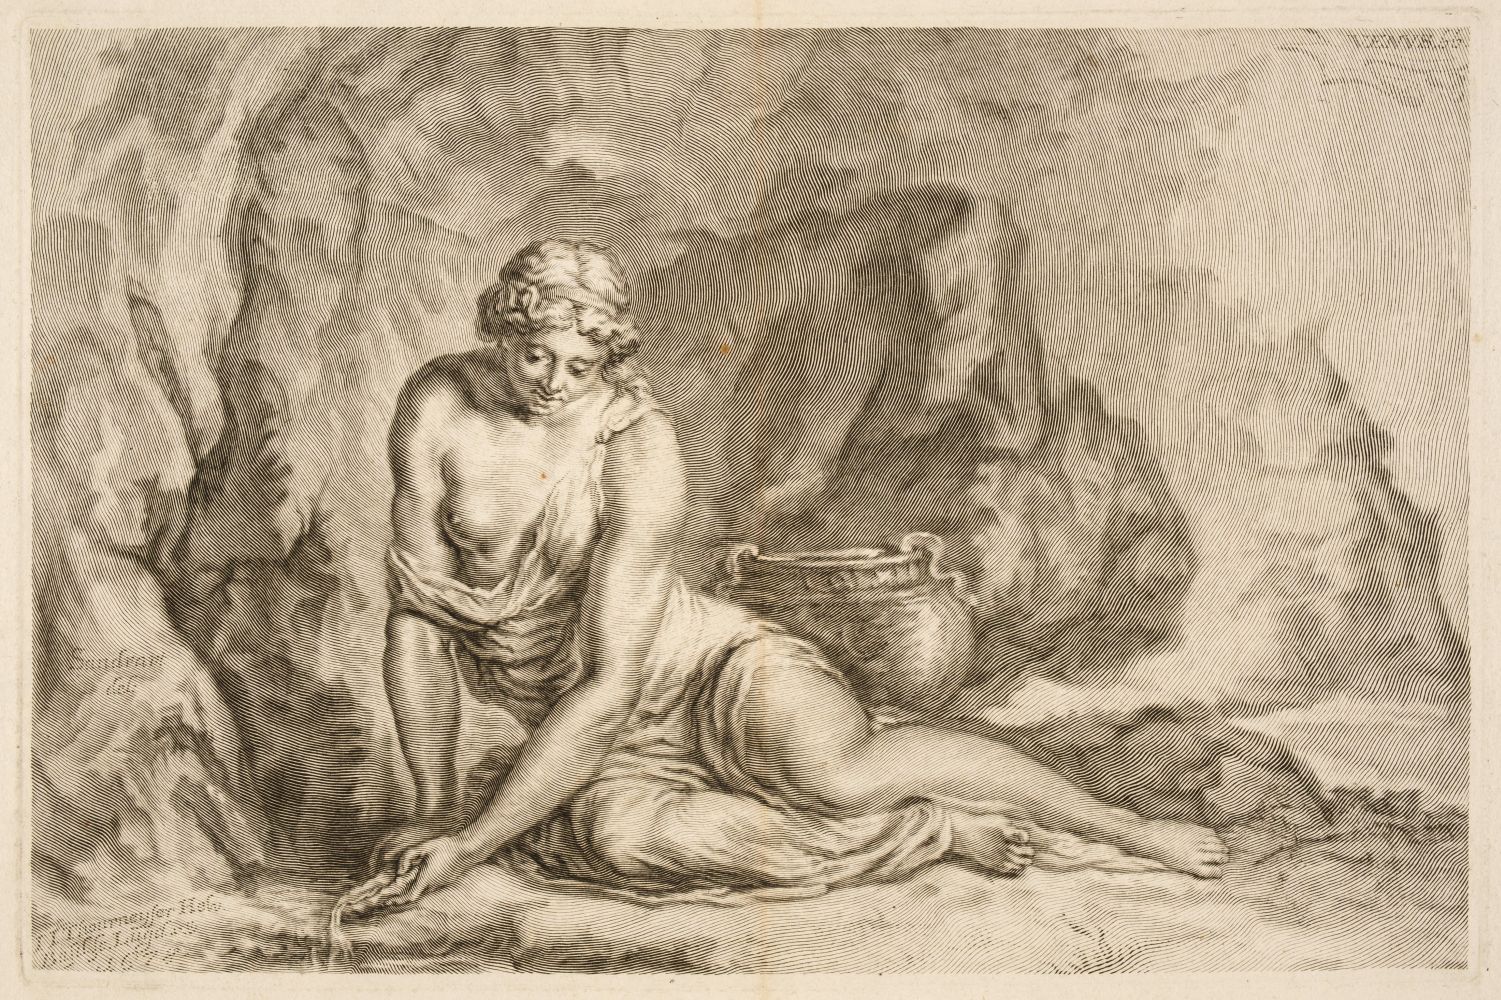 Thourneysen (Johann Jakob 1636-1711) after Sandrart, Venus, 1678, line engraving